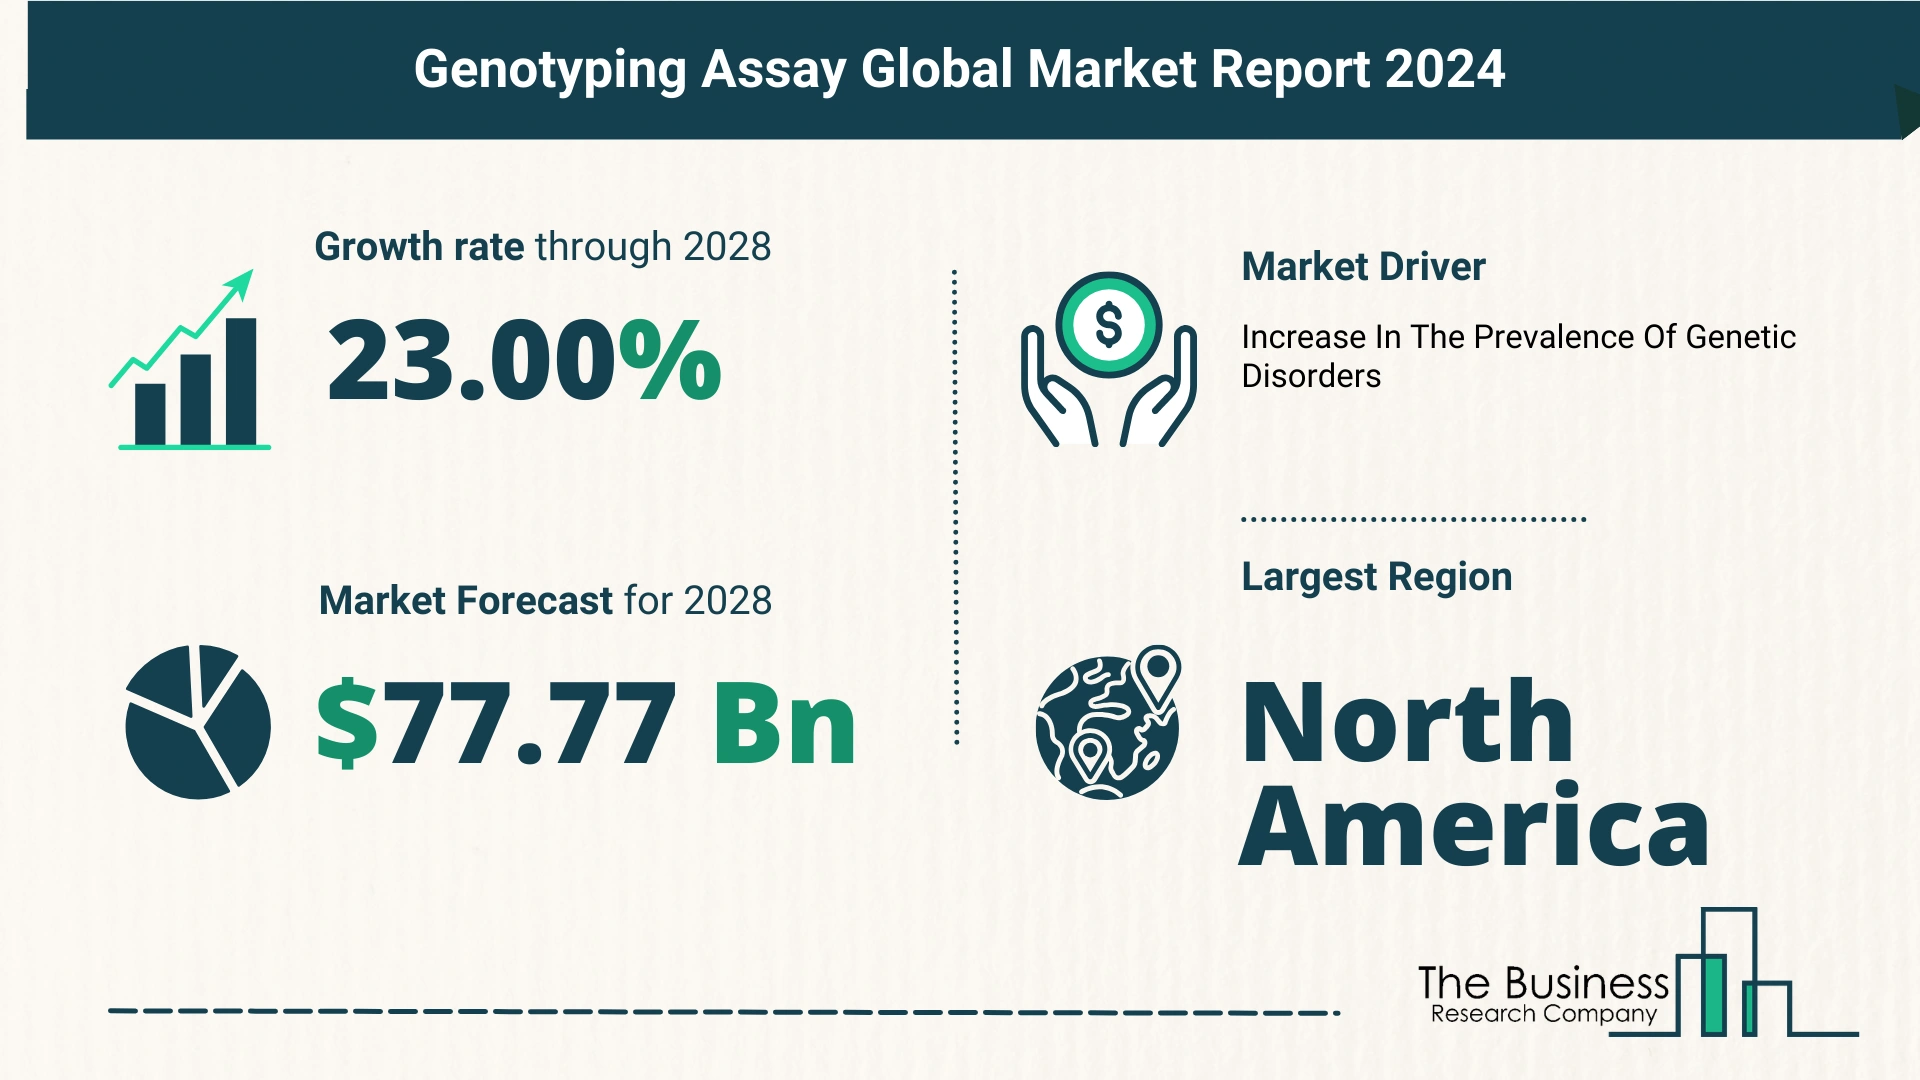 Global Genotyping Assay Market